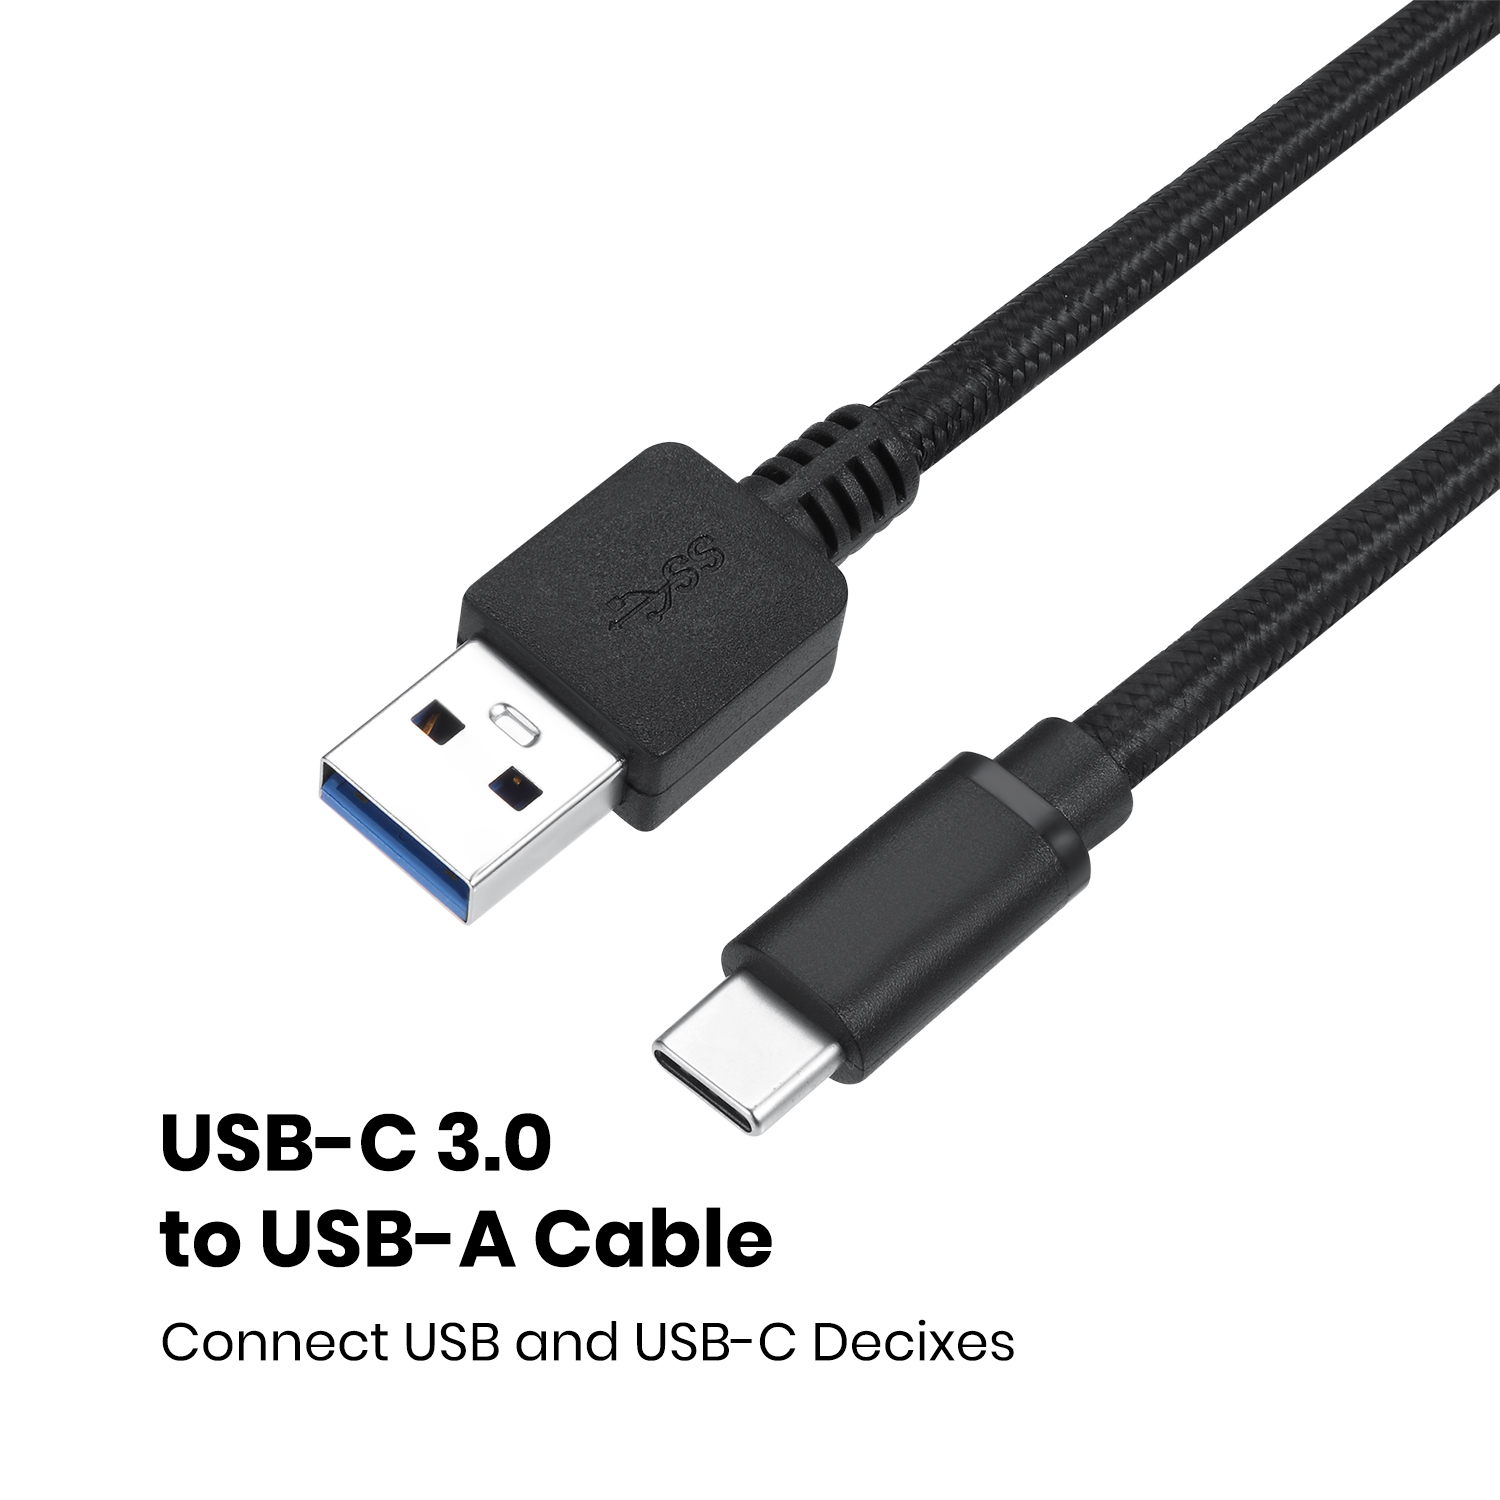 USB 3.0 Technology